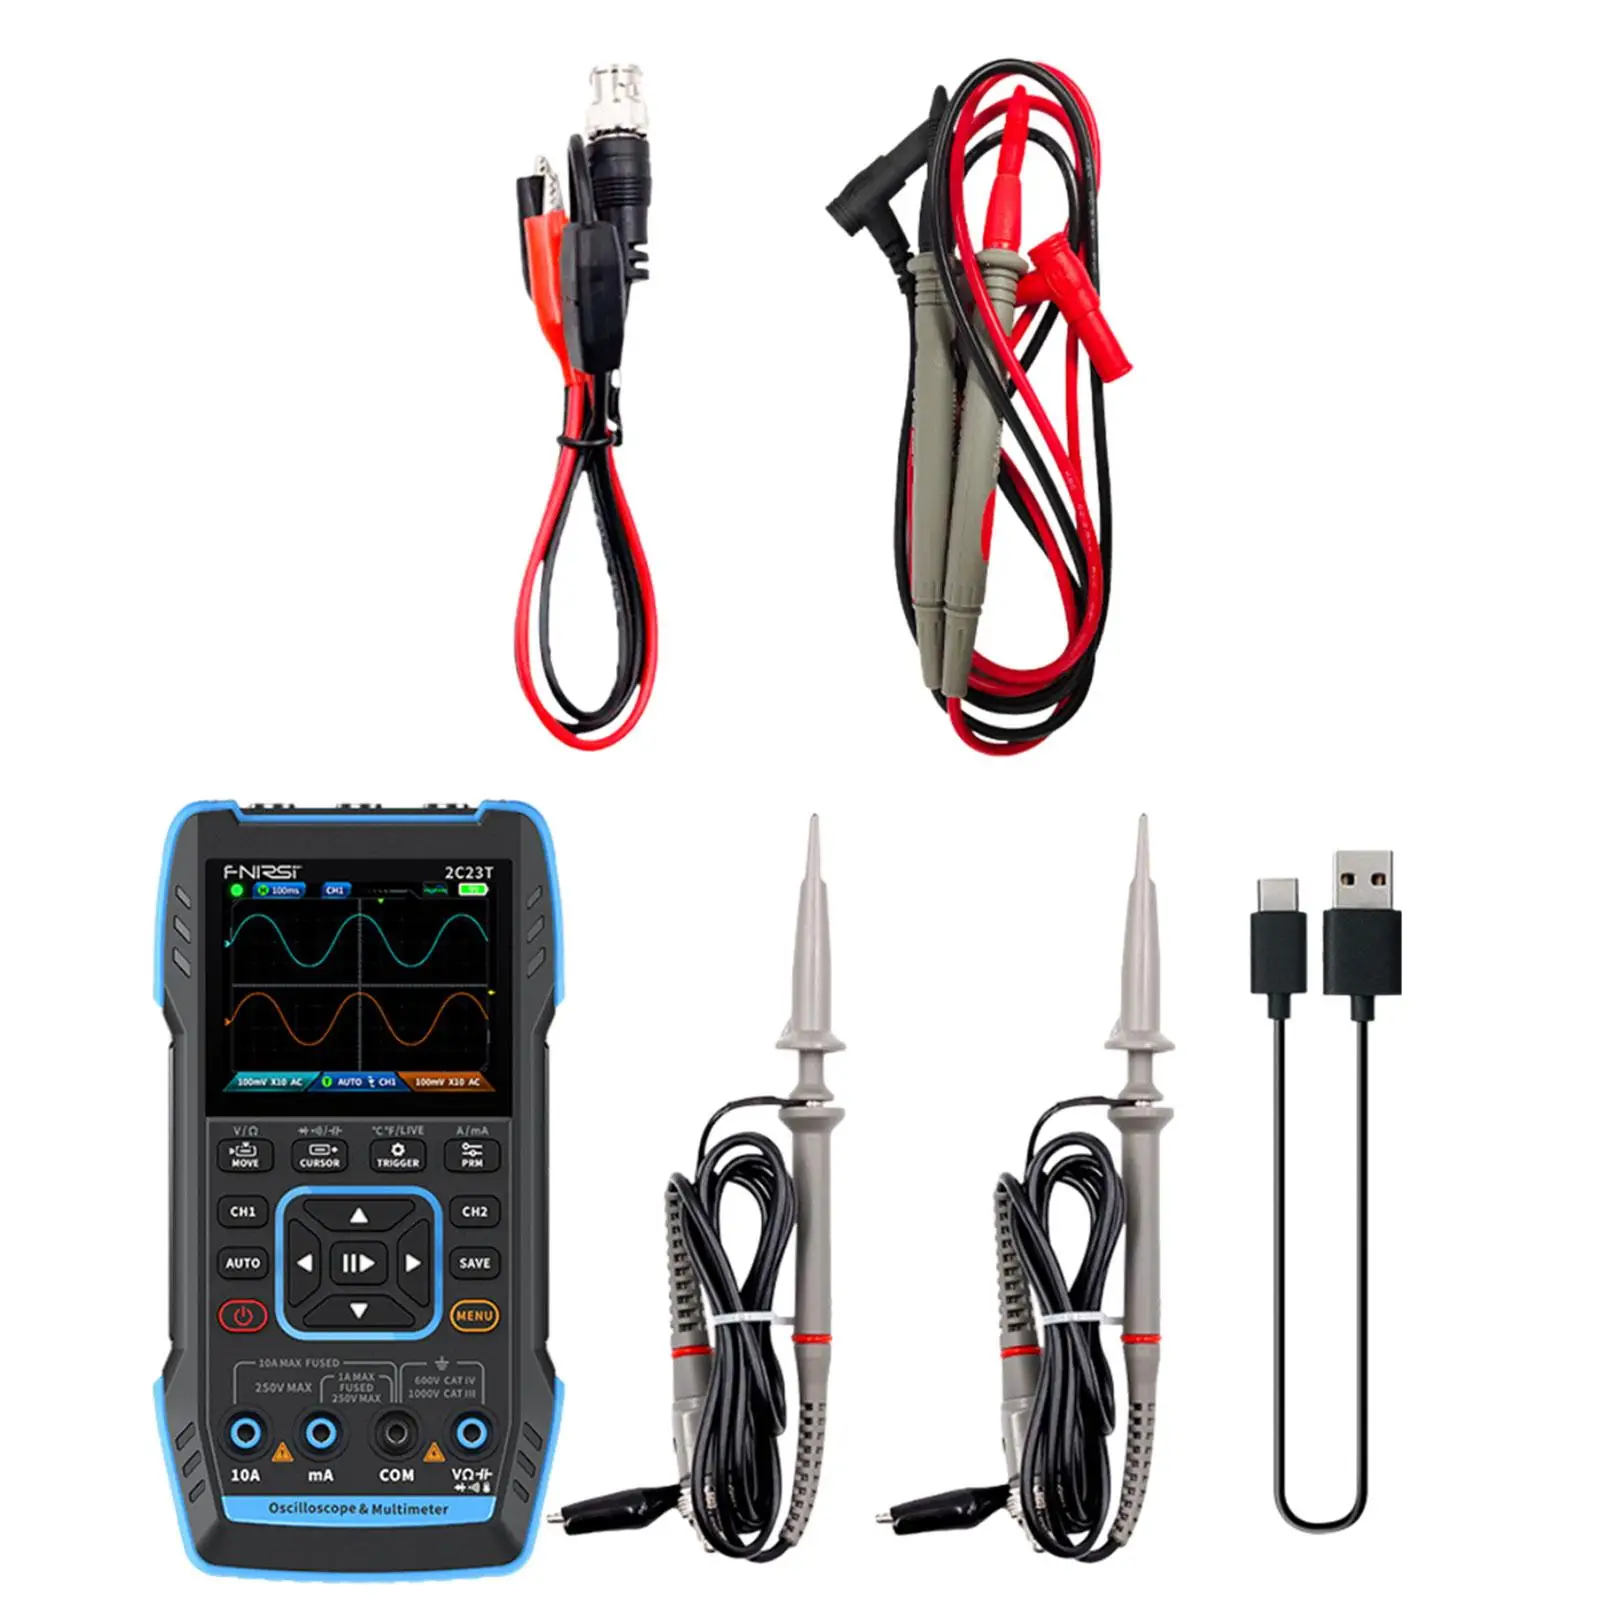 Digital Oscilloscope Oscilloscope Multimeter for Scientific Research Electronic Repair Power Tester Meter DIY Research Education